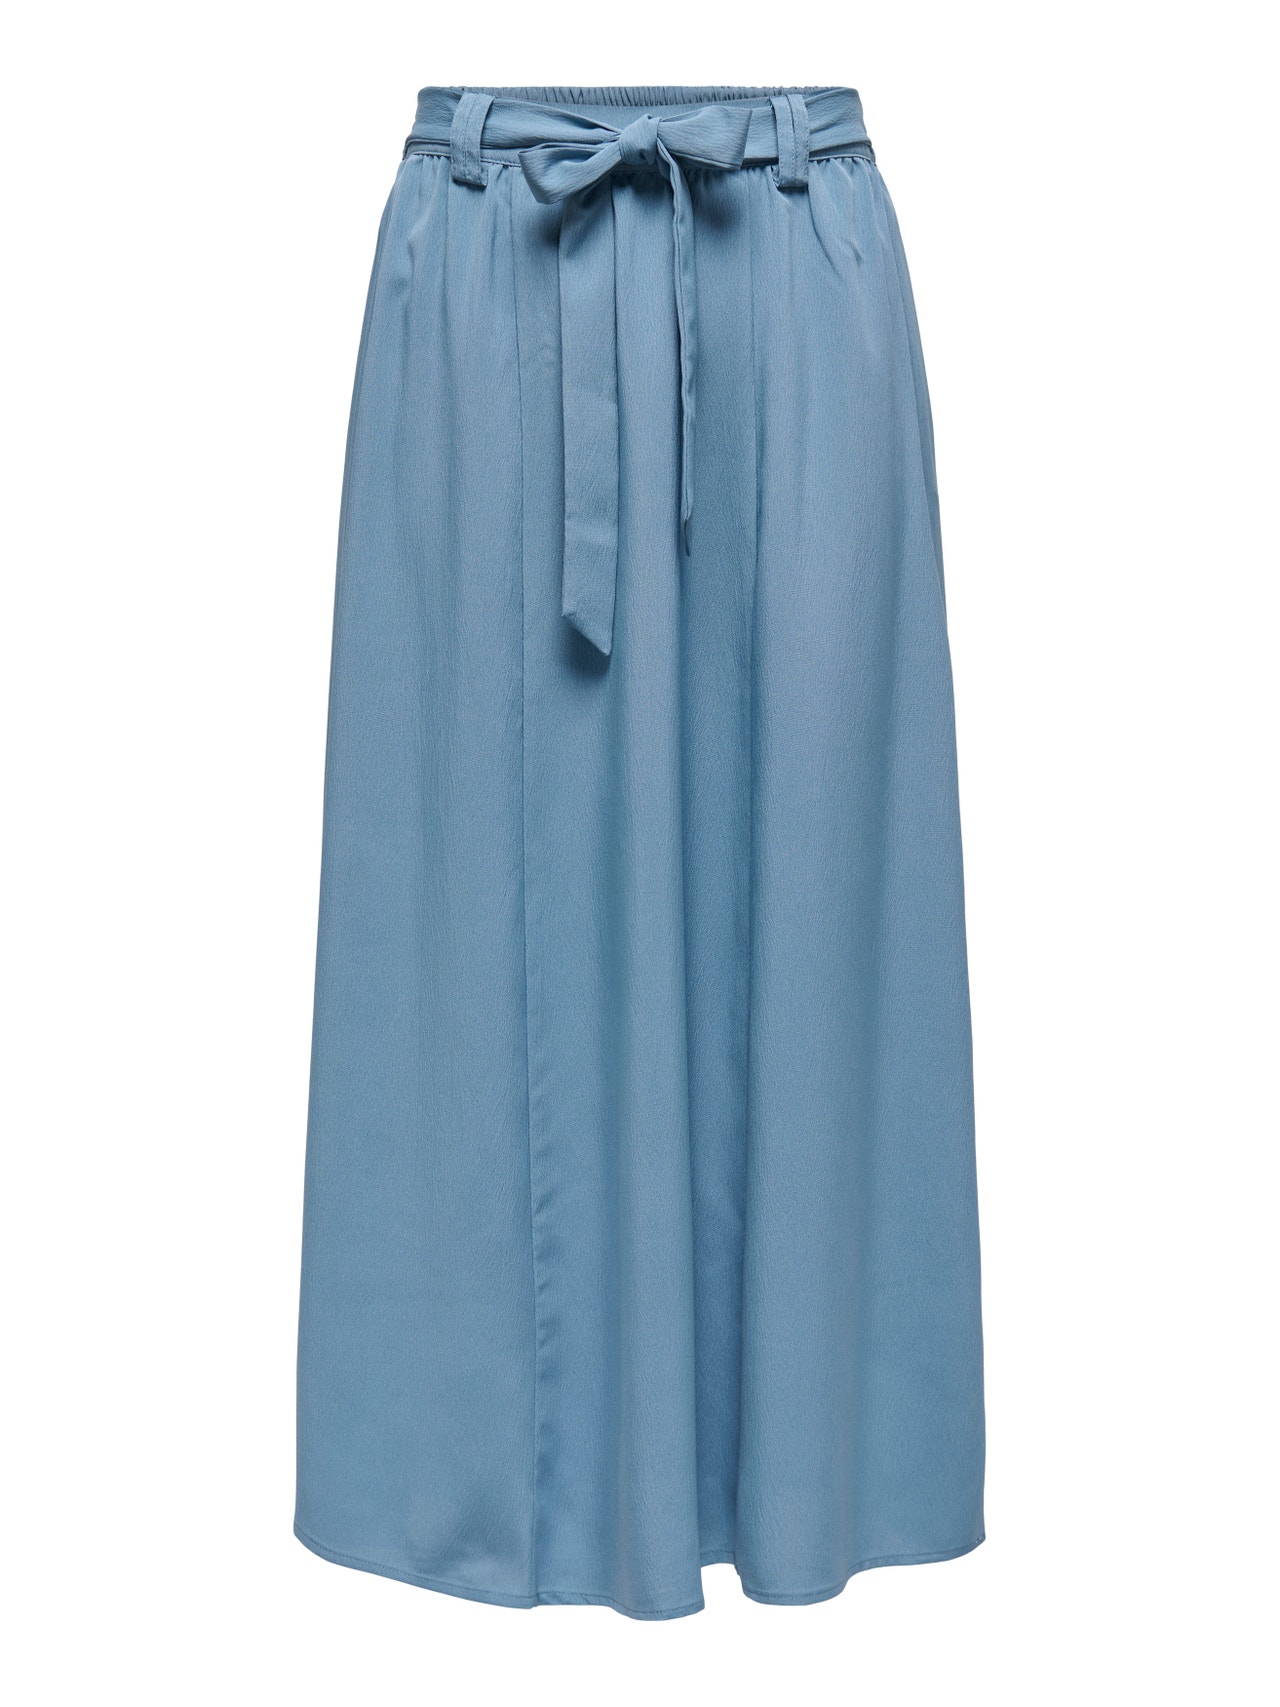 ONLY Maxi nederdel med bælte -Coronet Blue - 15335565